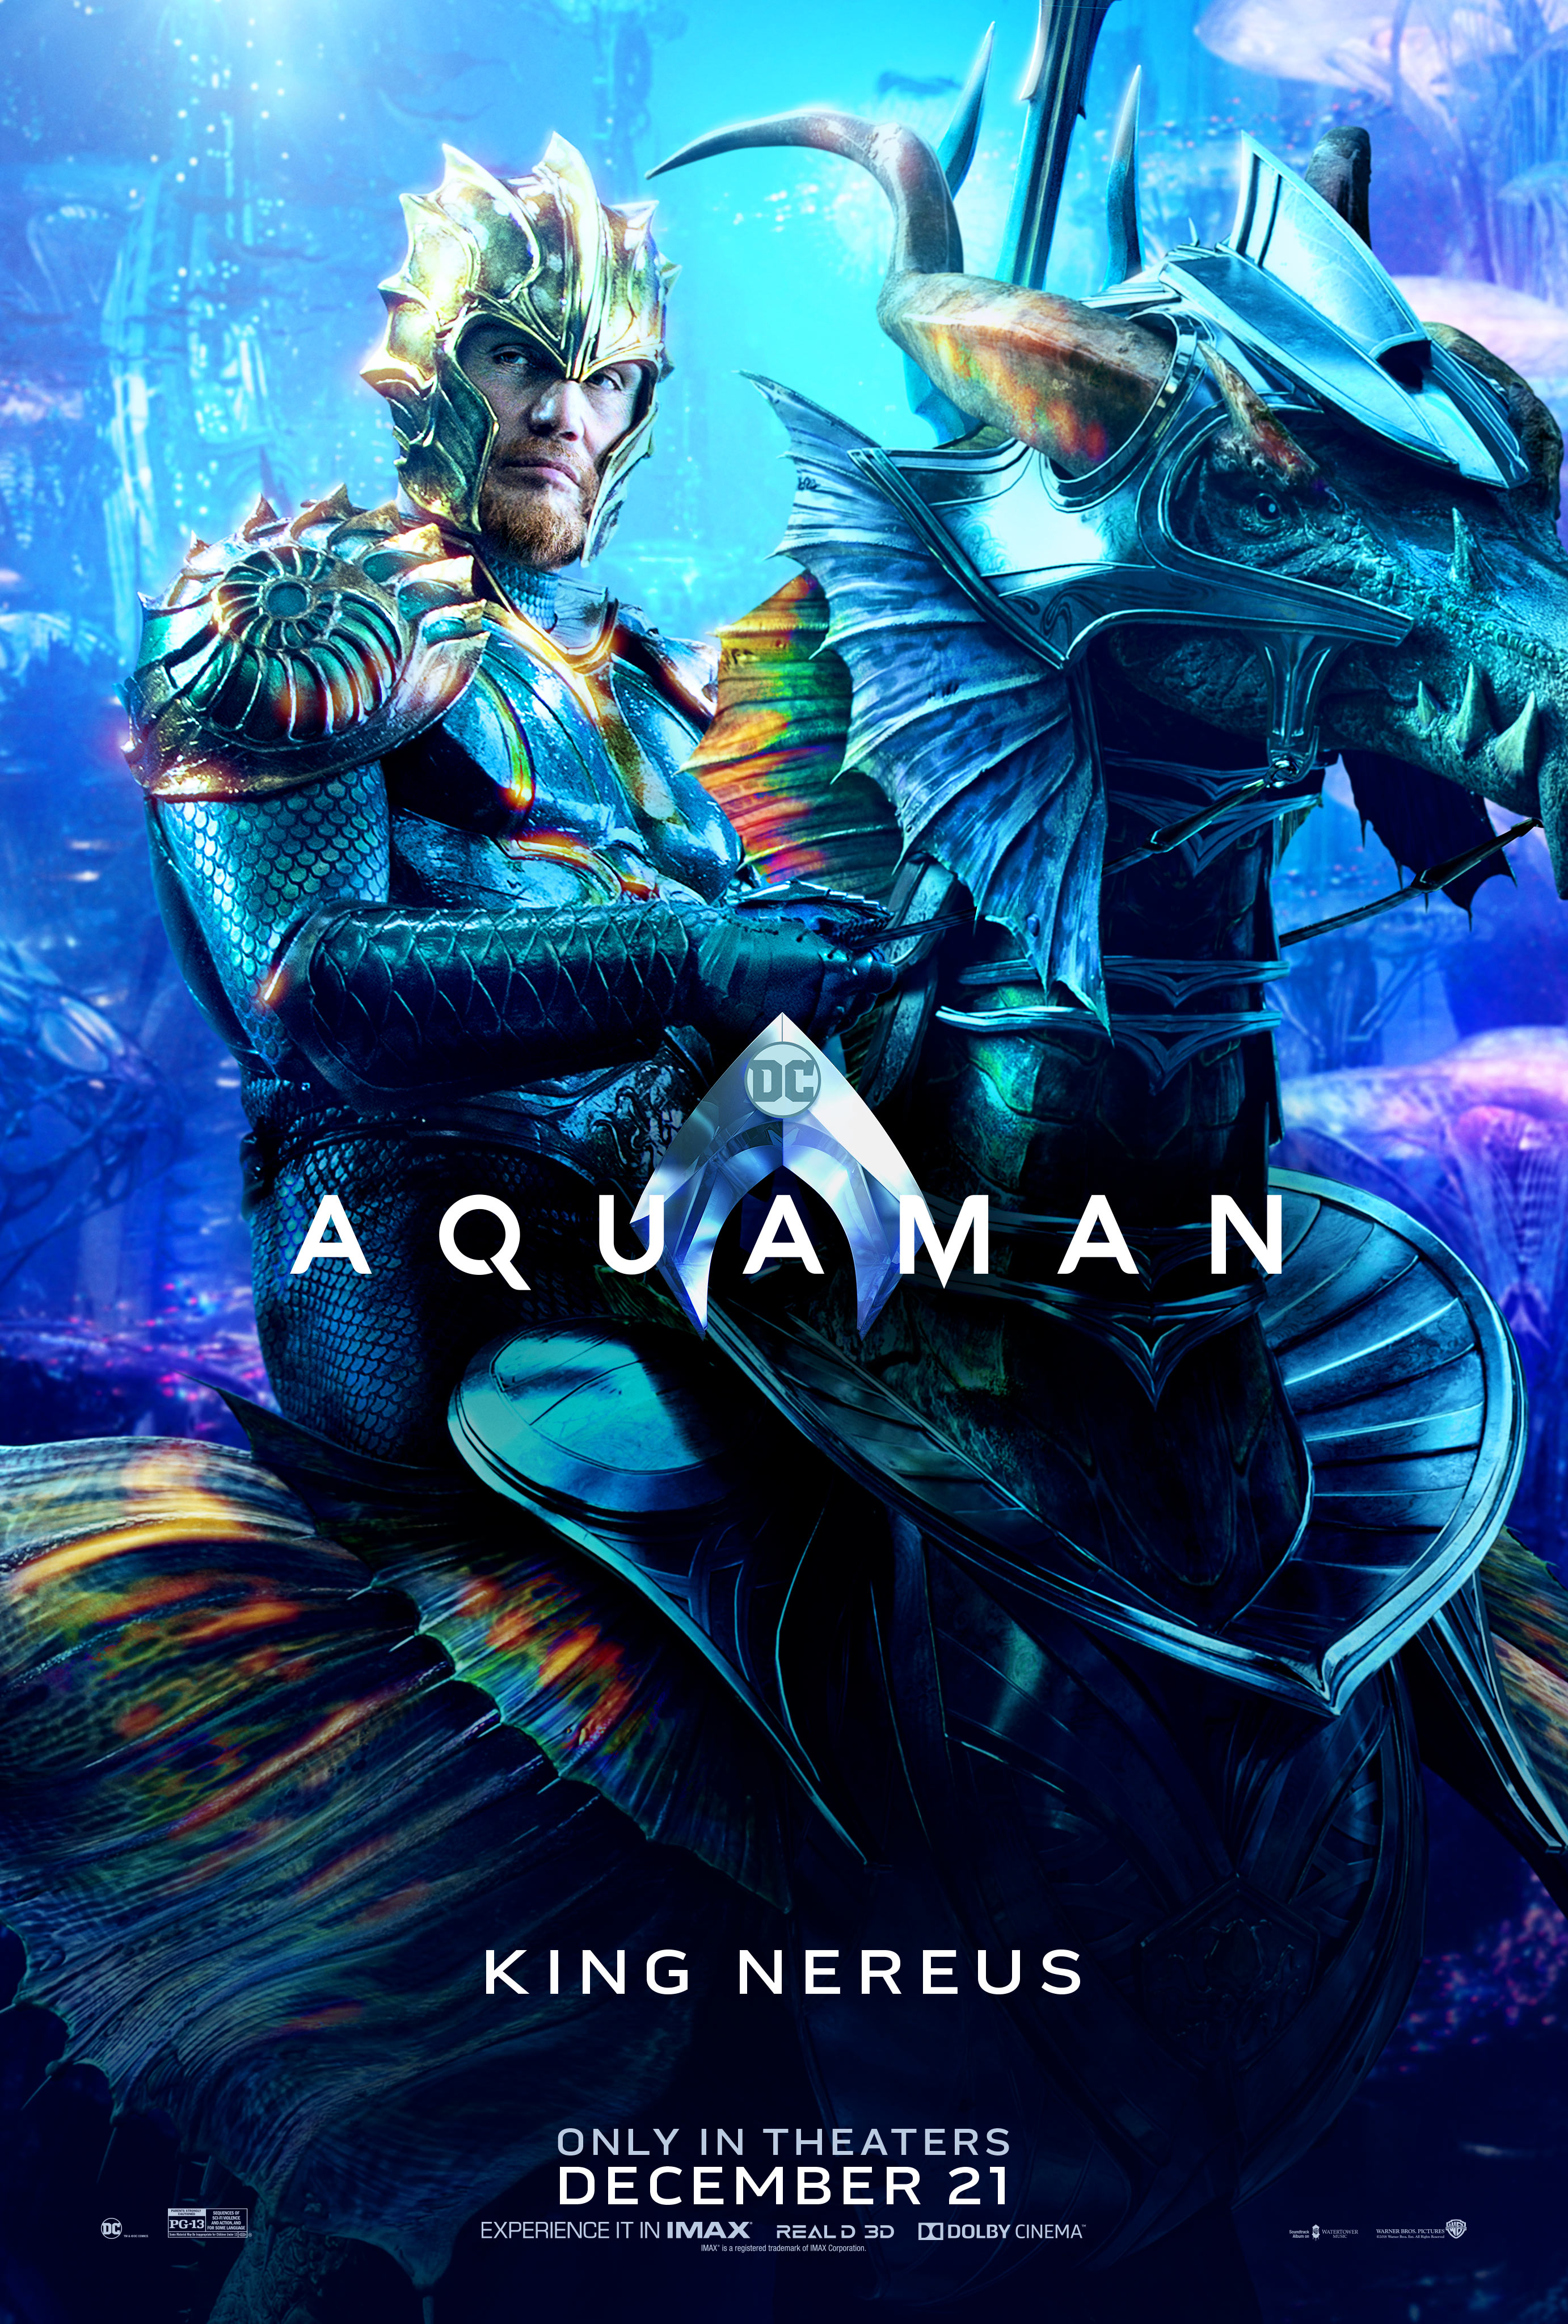 Aquaman (2018) Character Poster Lundgren as King Nereus: DC extended universe Photo